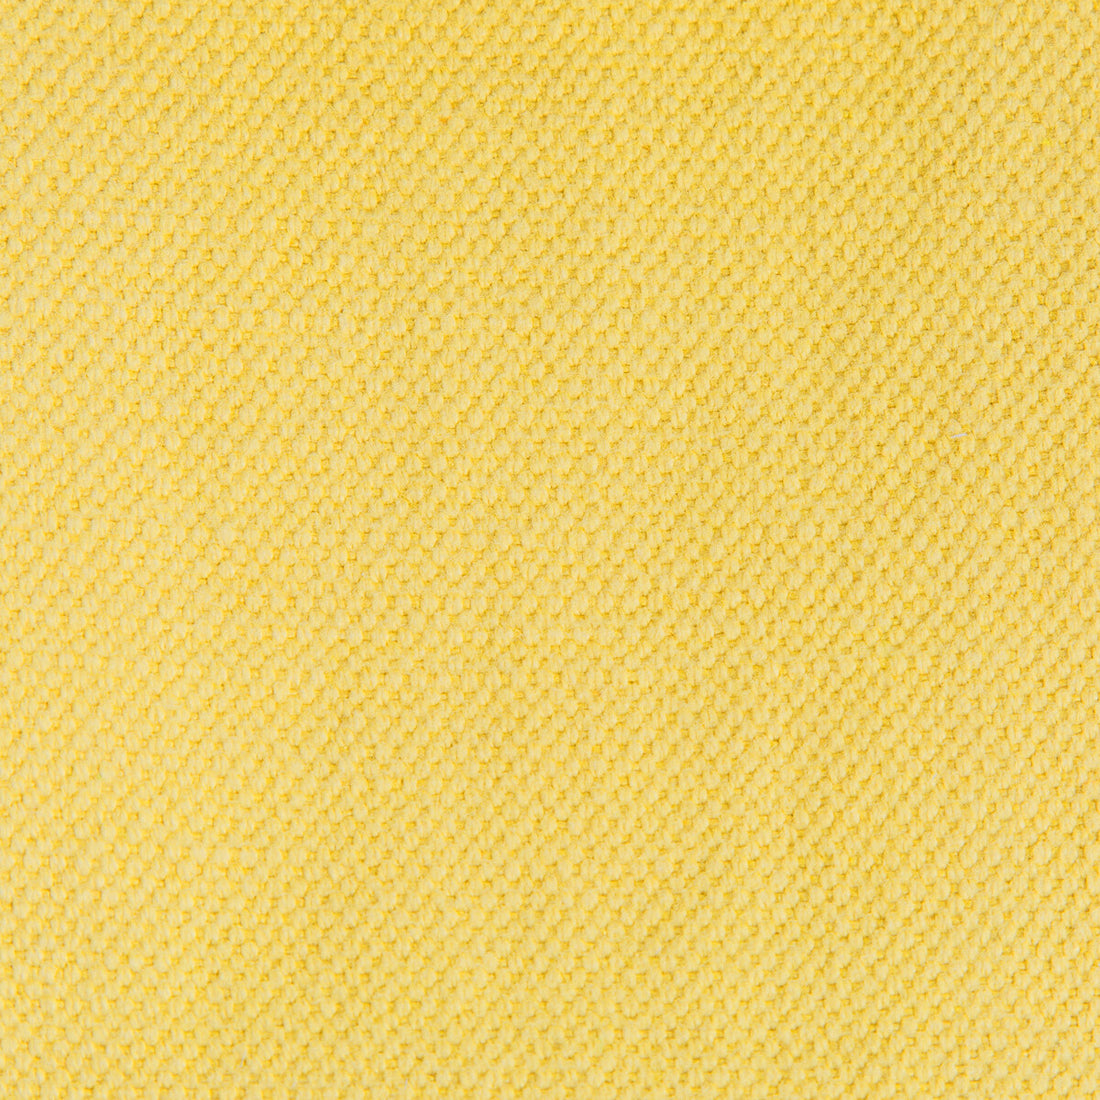 Lima fabric in amarillo color - pattern GDT5616.006.0 - by Gaston y Daniela in the Gaston Nuevo Mundo collection